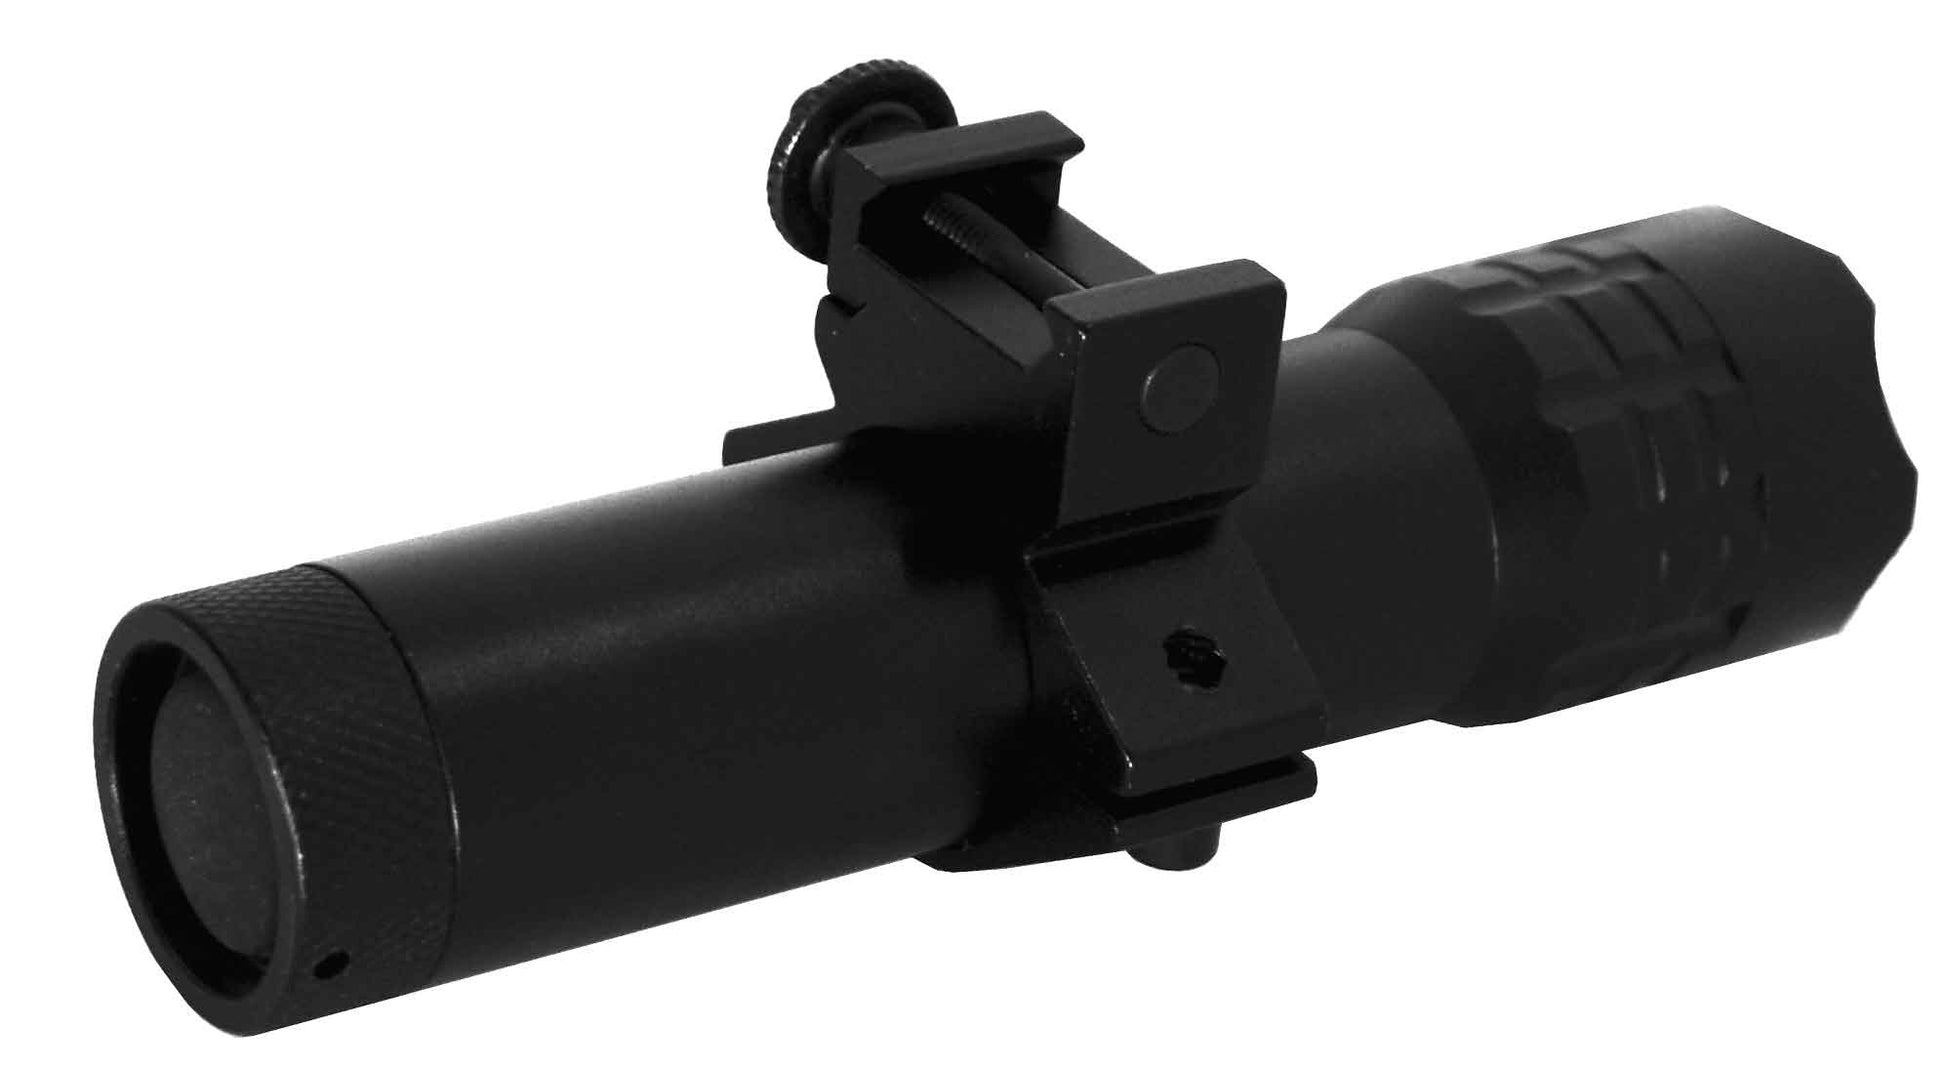 picatinny mounted flashlight for shotguns and rifles.